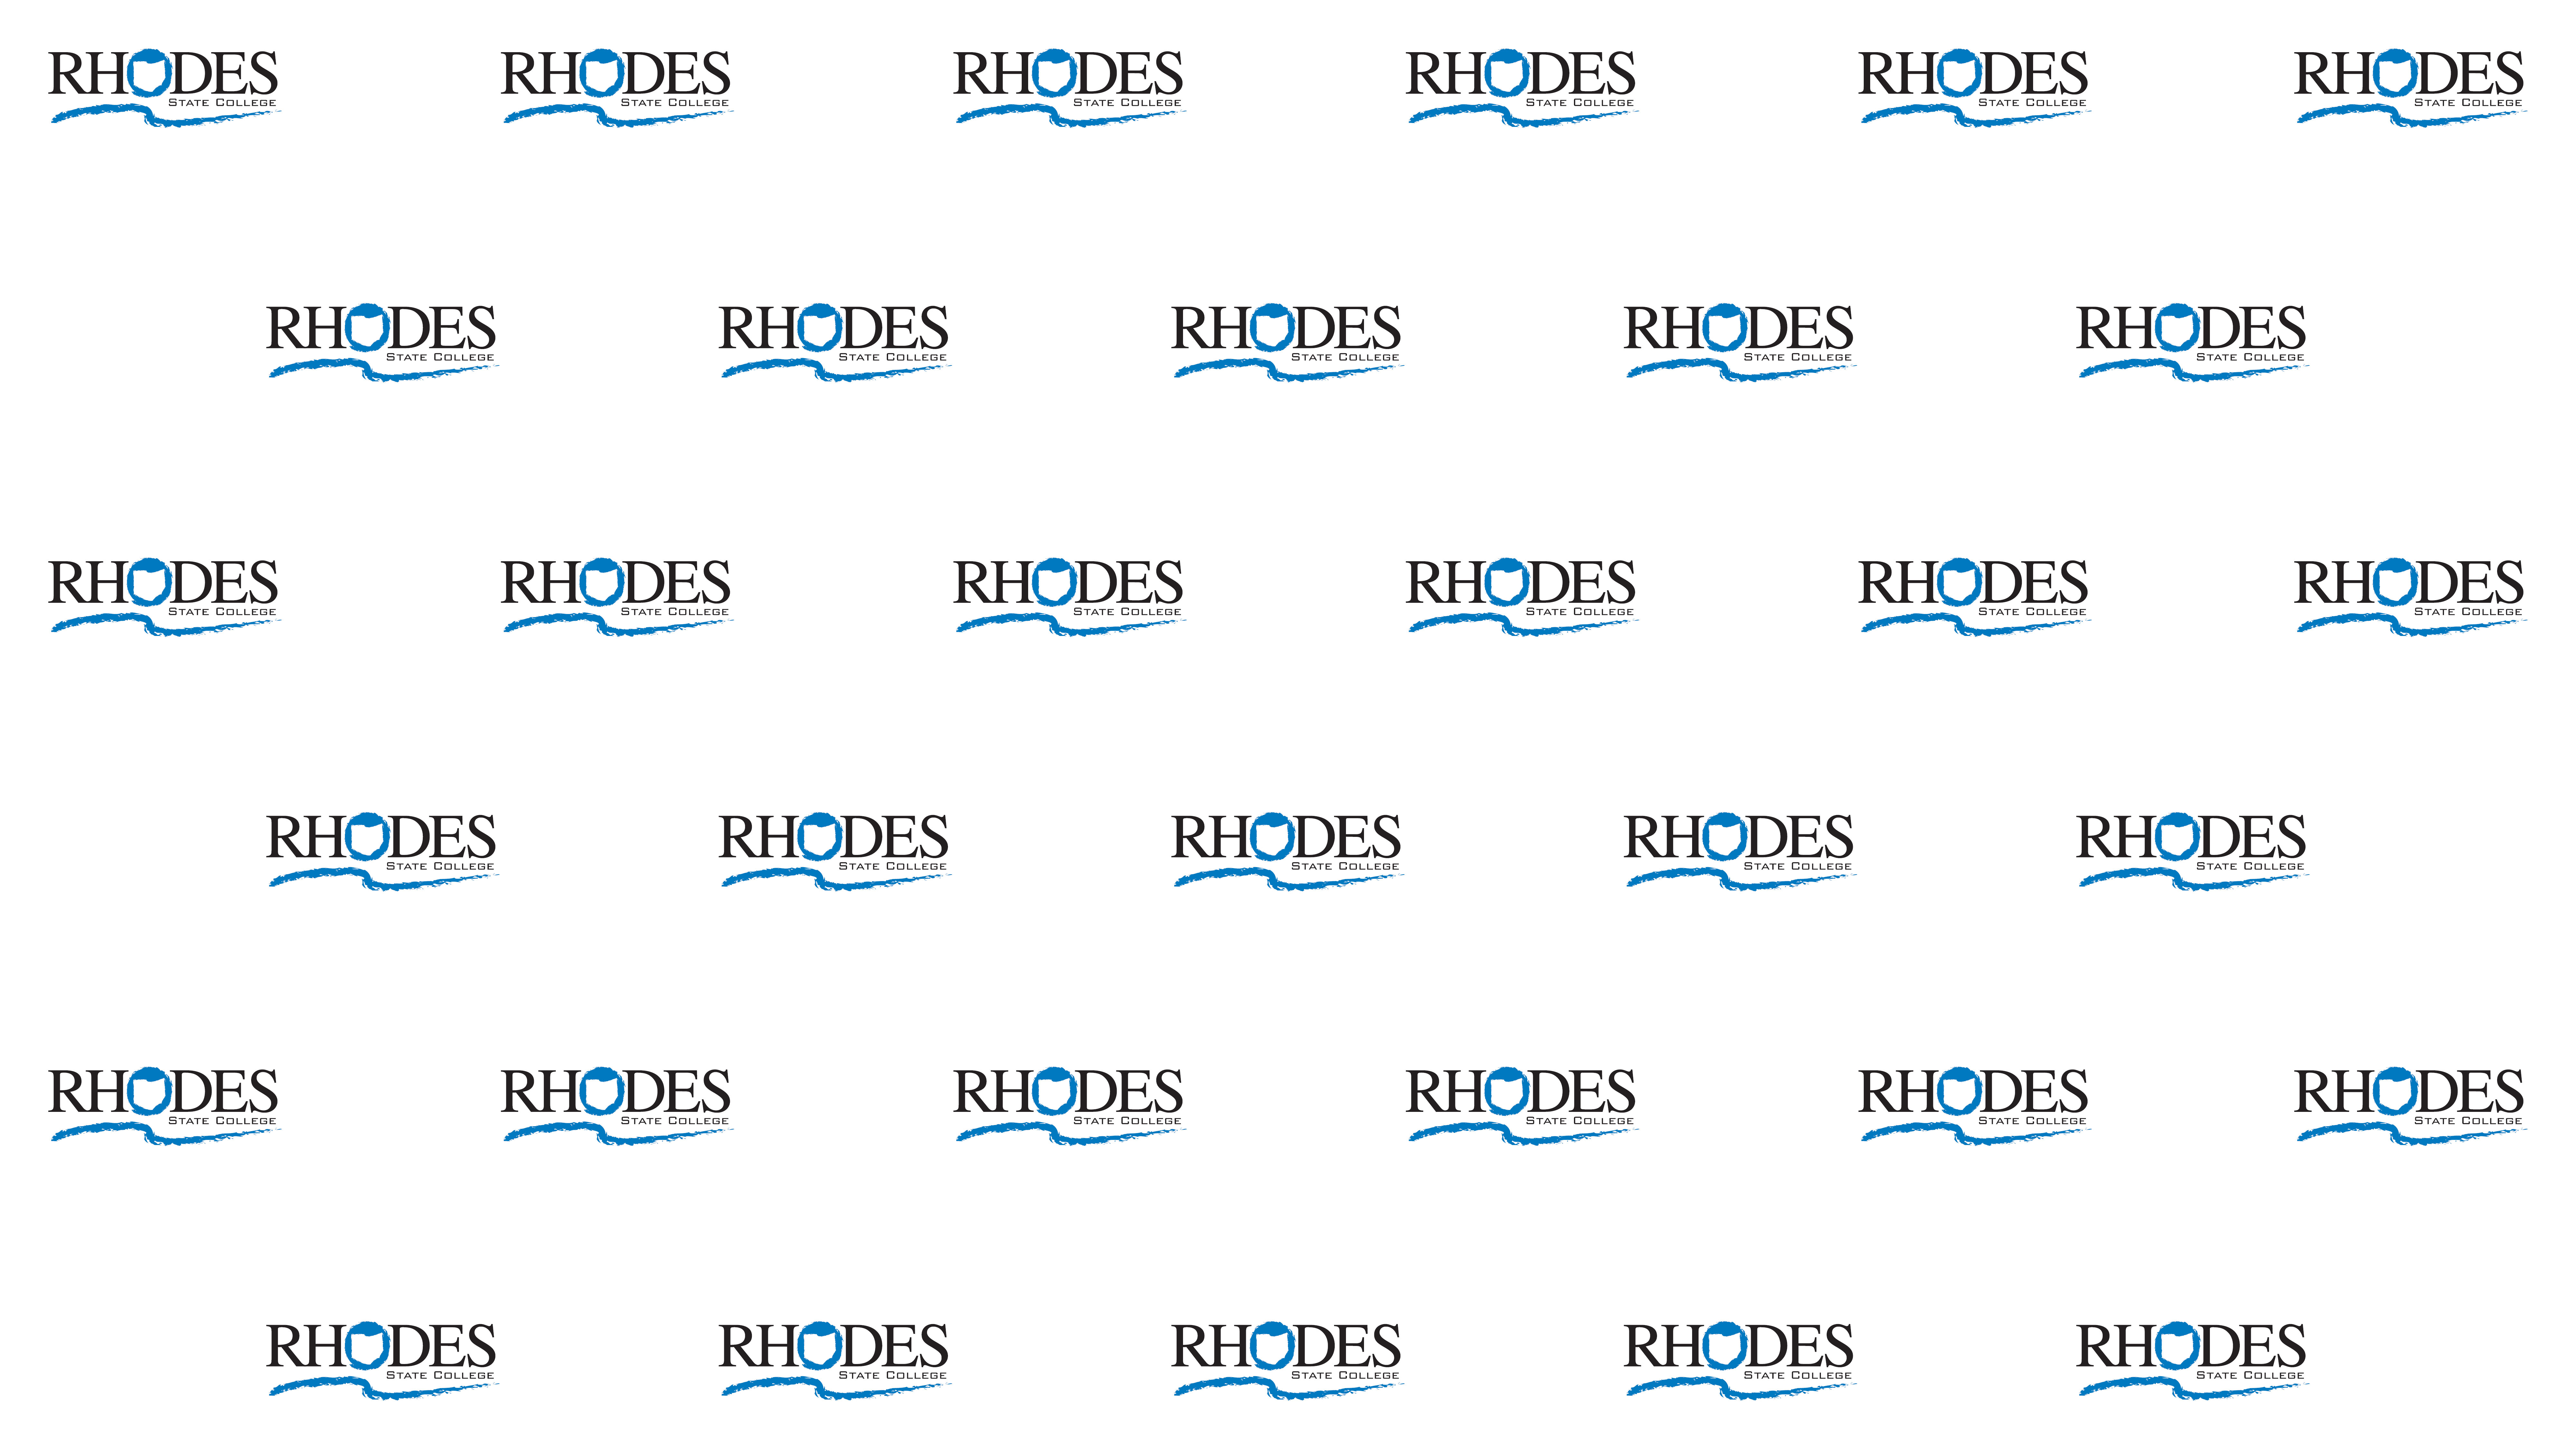 download rhodes logo on white background